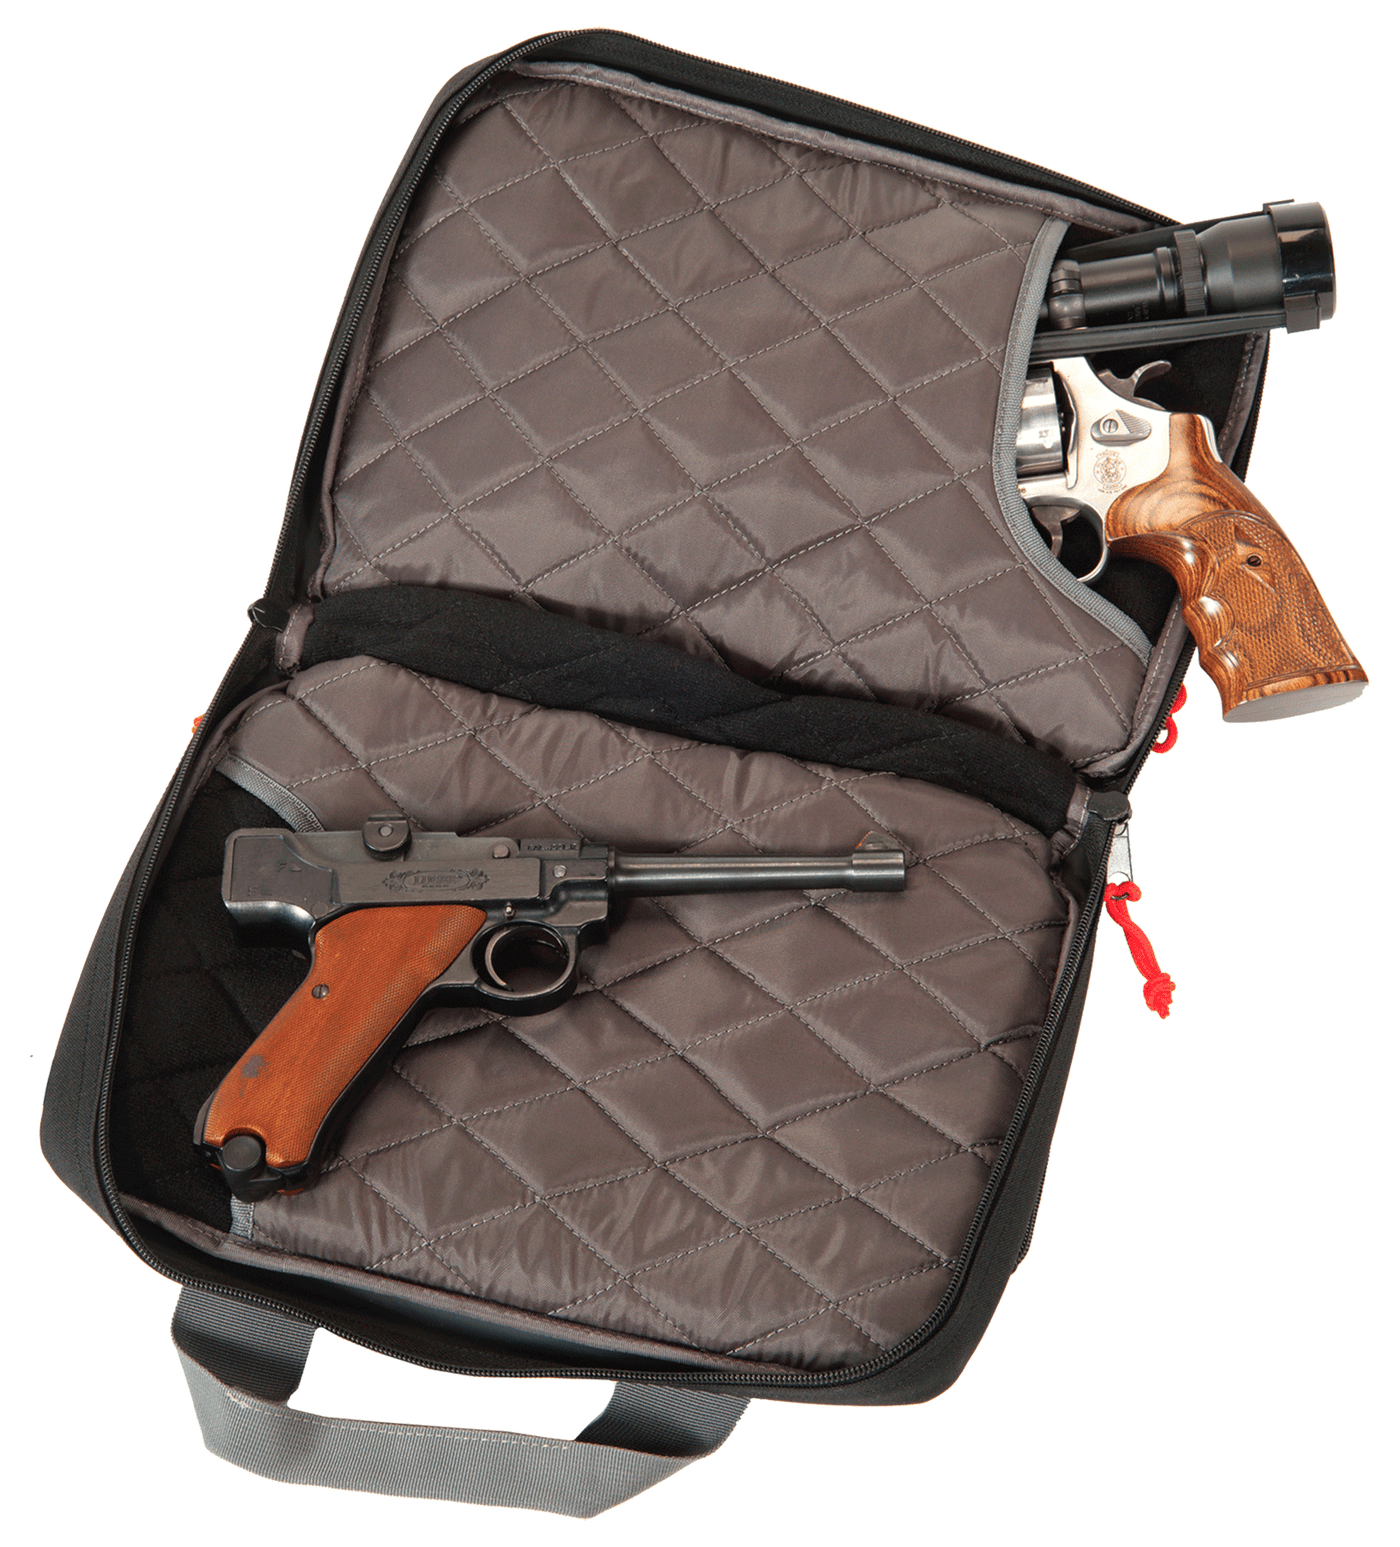 Gps Gps Quad Pistol Range Bag Black Gun Storage